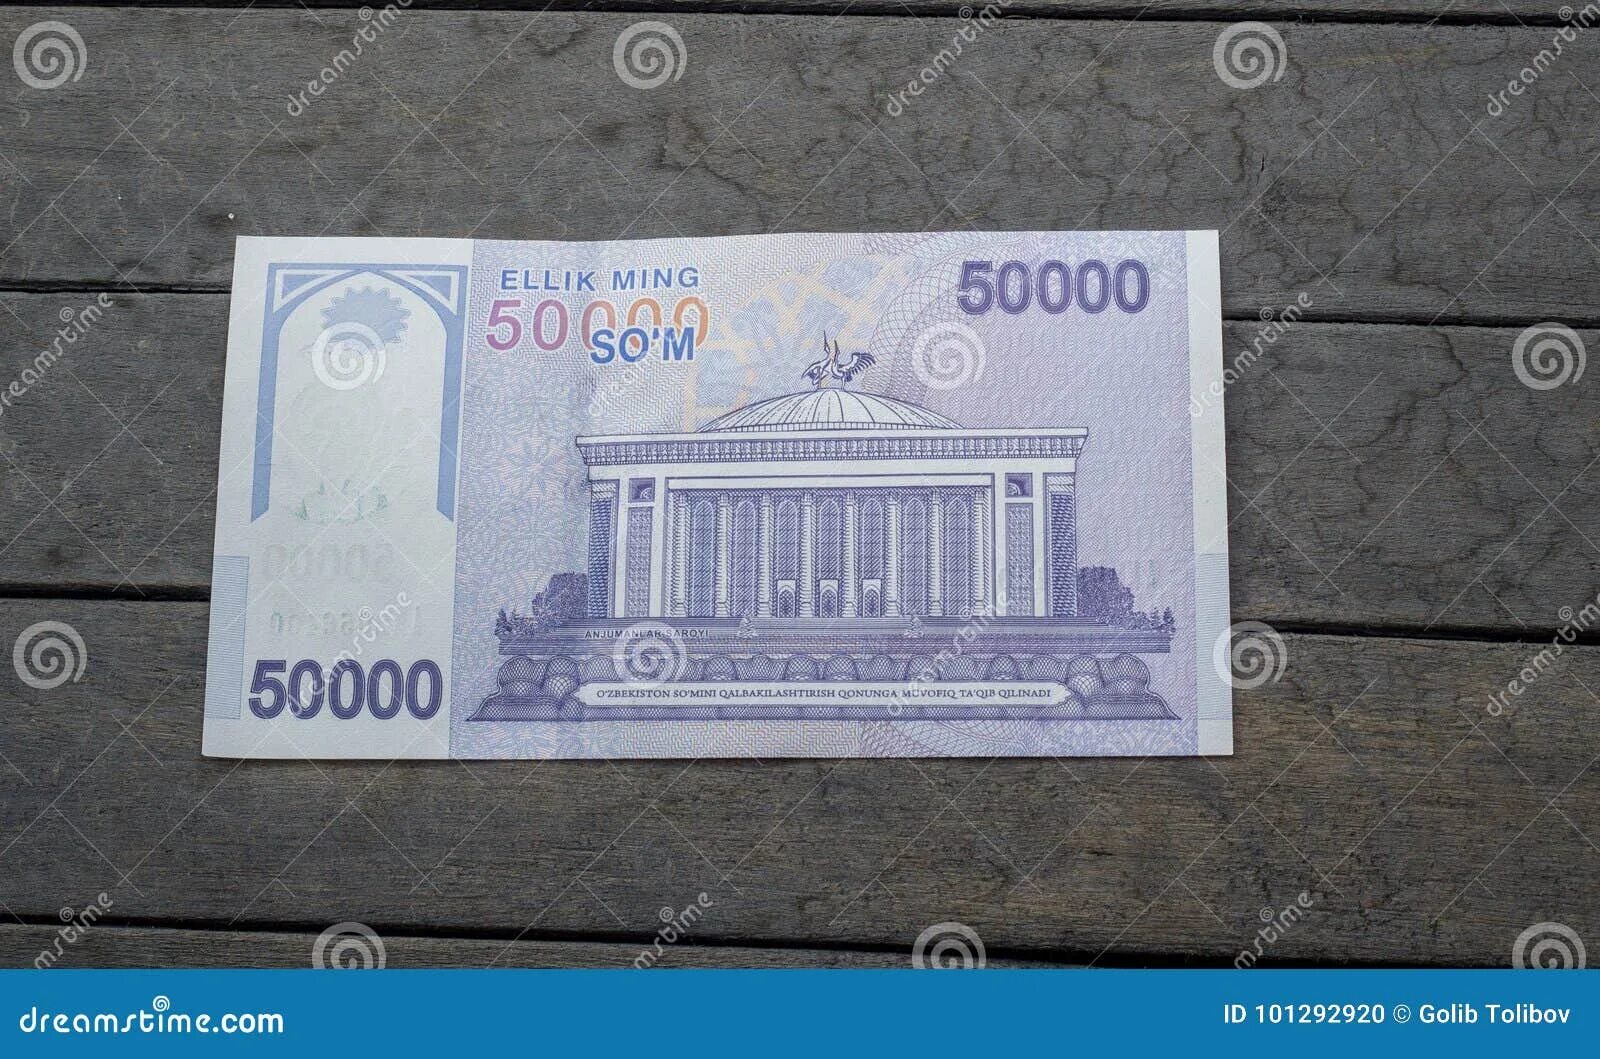 Узбекский 50000